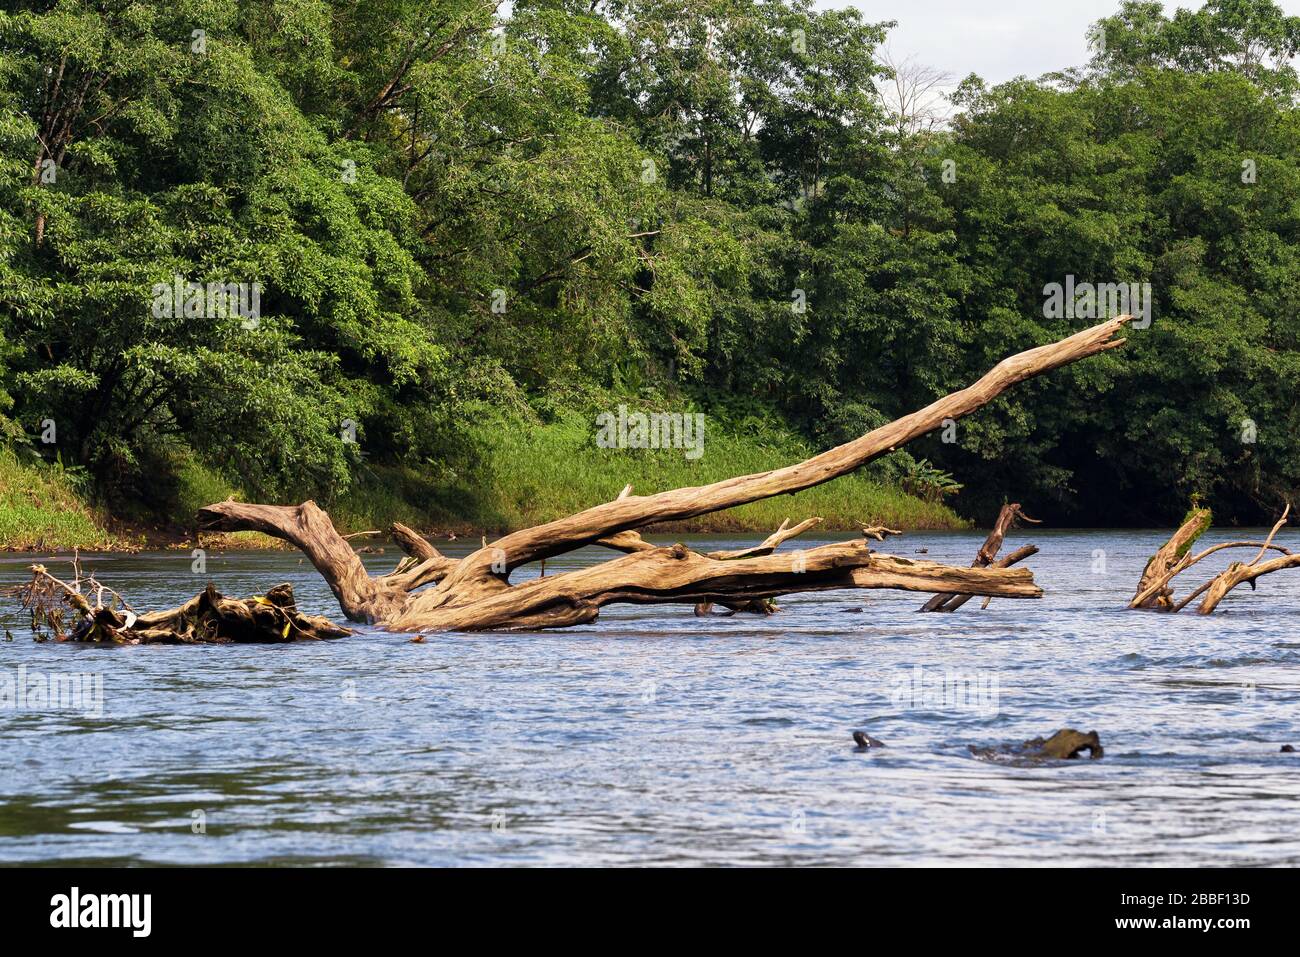 Dead tree in the middle of the Rio Sarapiqui waters. Tropical and wild river habitat concept. Puerto Viejo de Sarapiqui, Costa Rica. Stock Photo